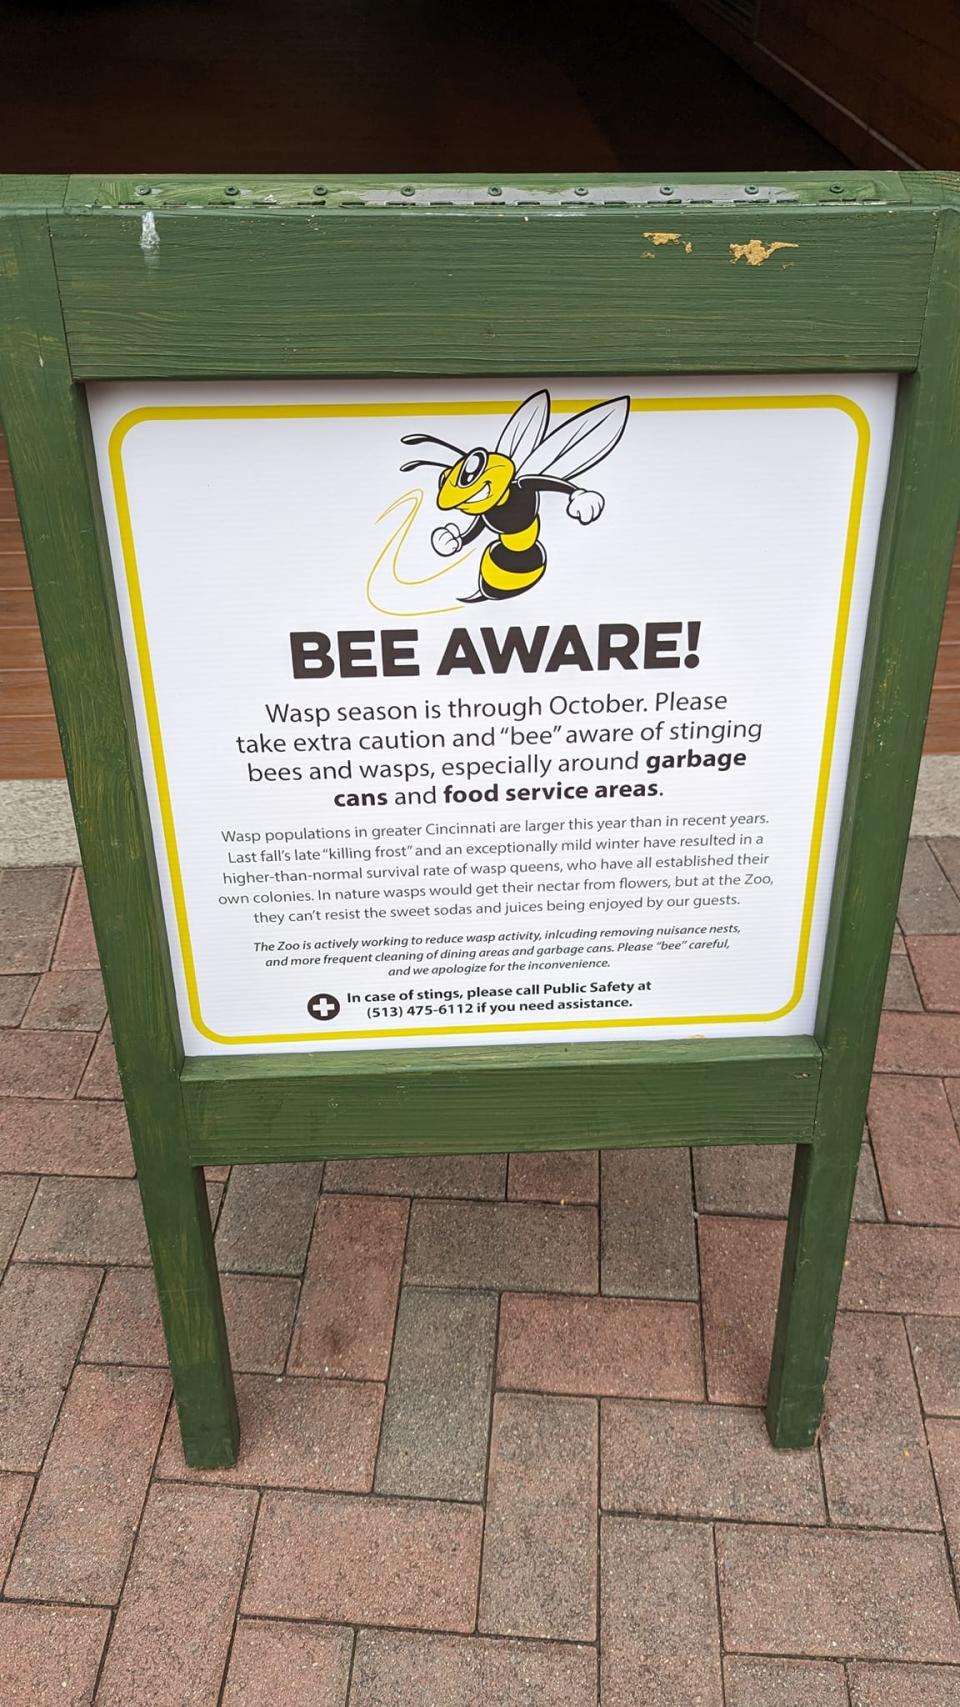 Cincinnati Zoo & Botanical Garden posts a sign to warn visitors of a proliferation of wasps this season.